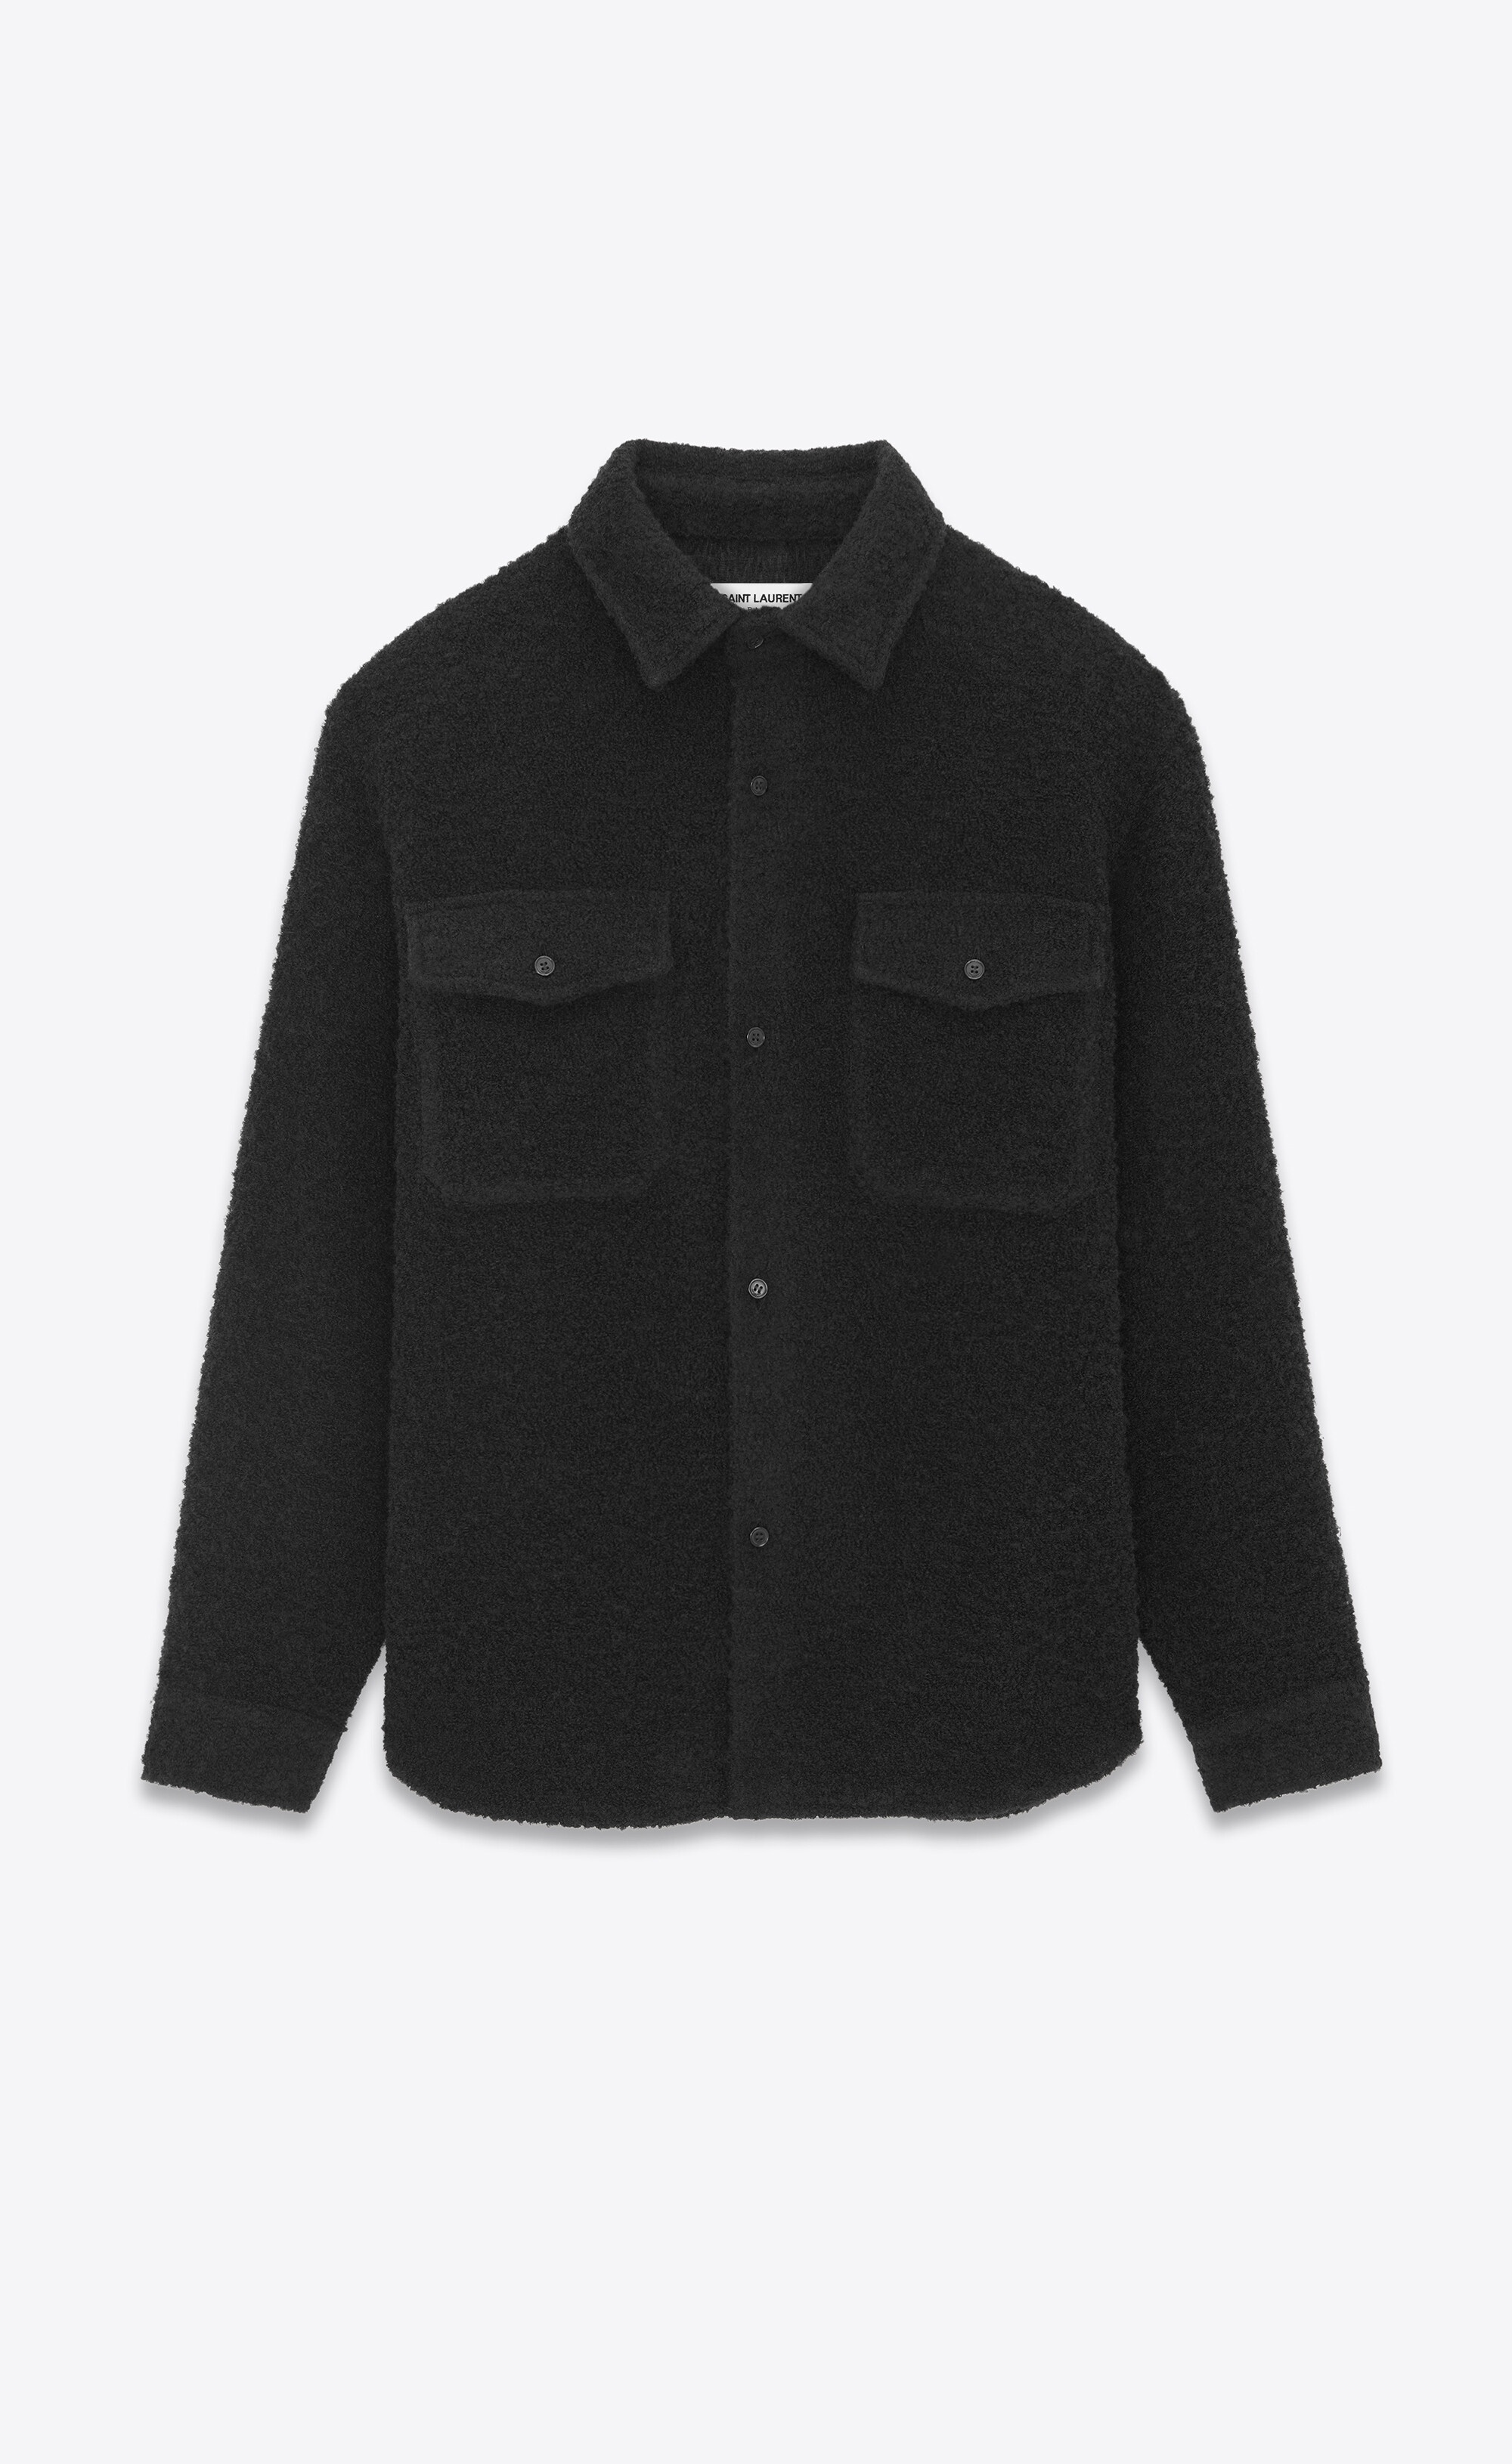 overshirt in raw black denim wool - 1